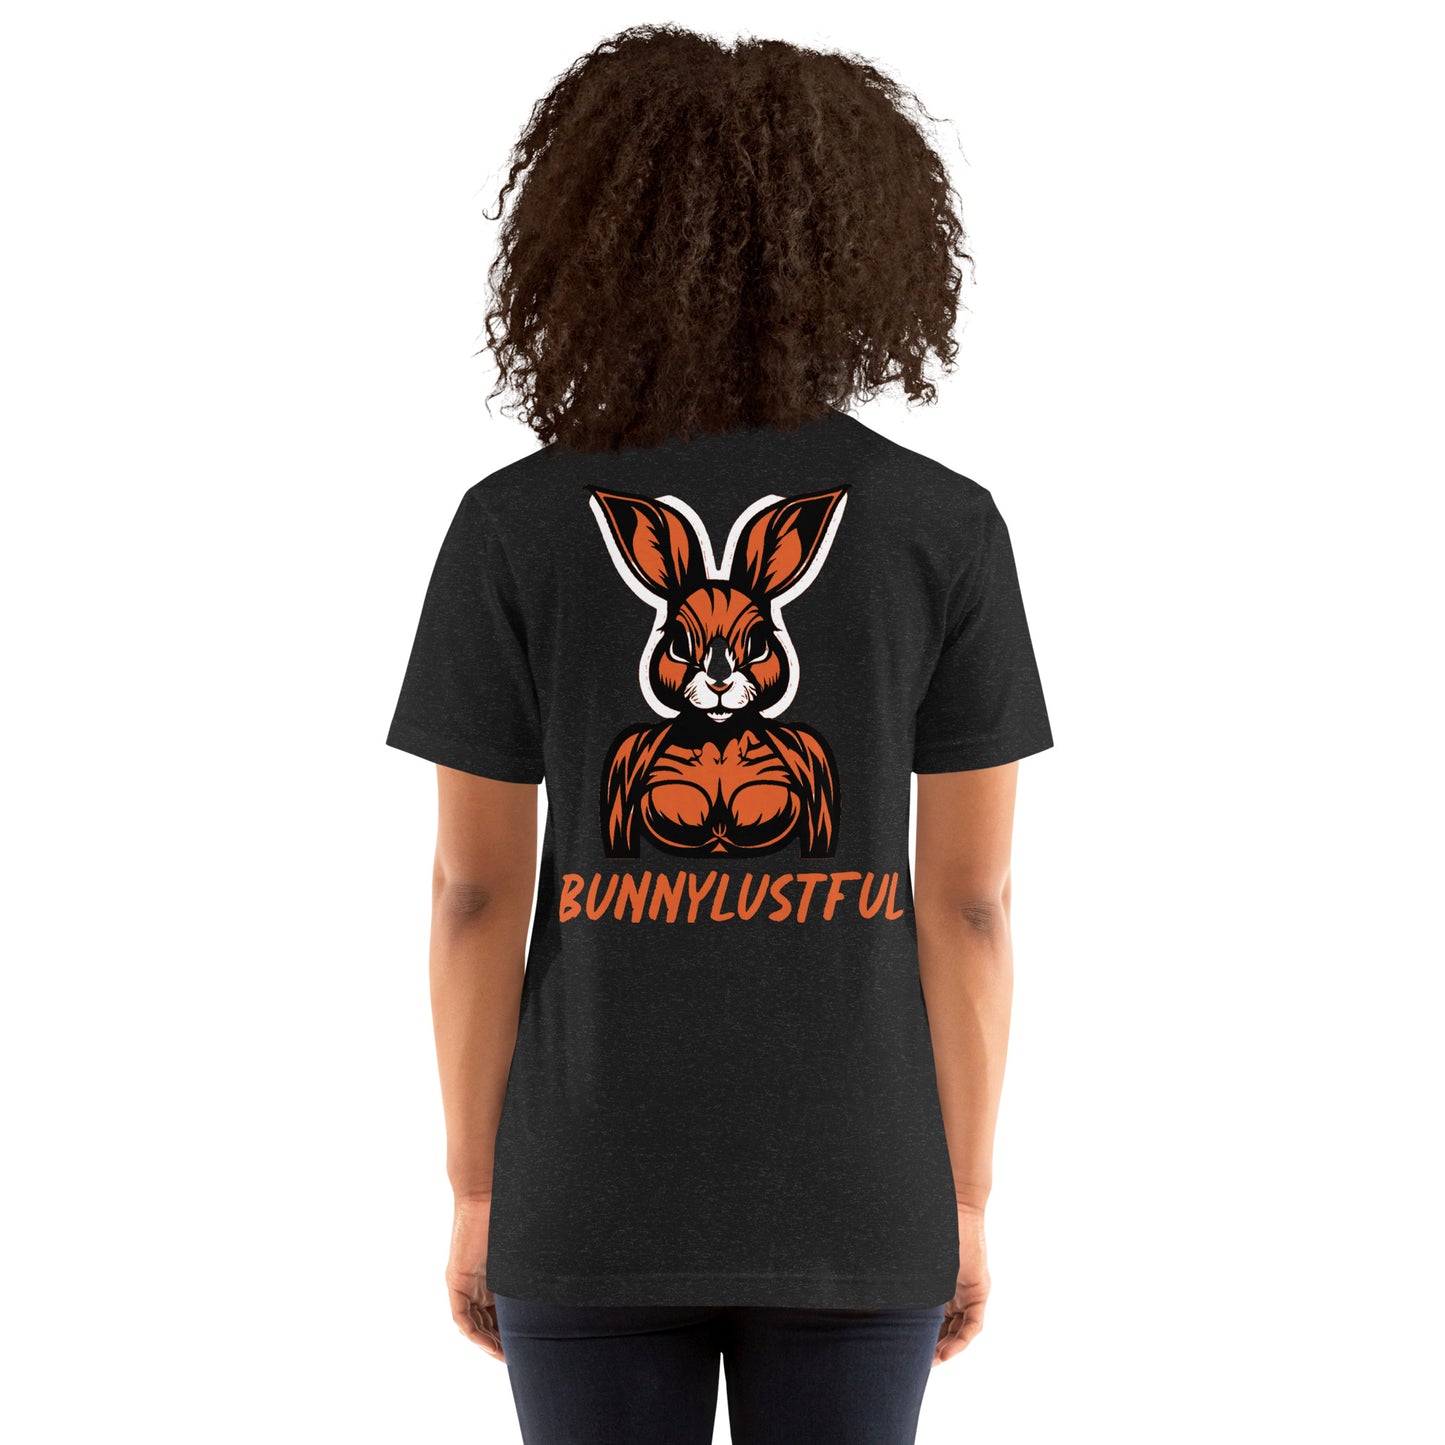 „Bunnylustful“ T-Shirt